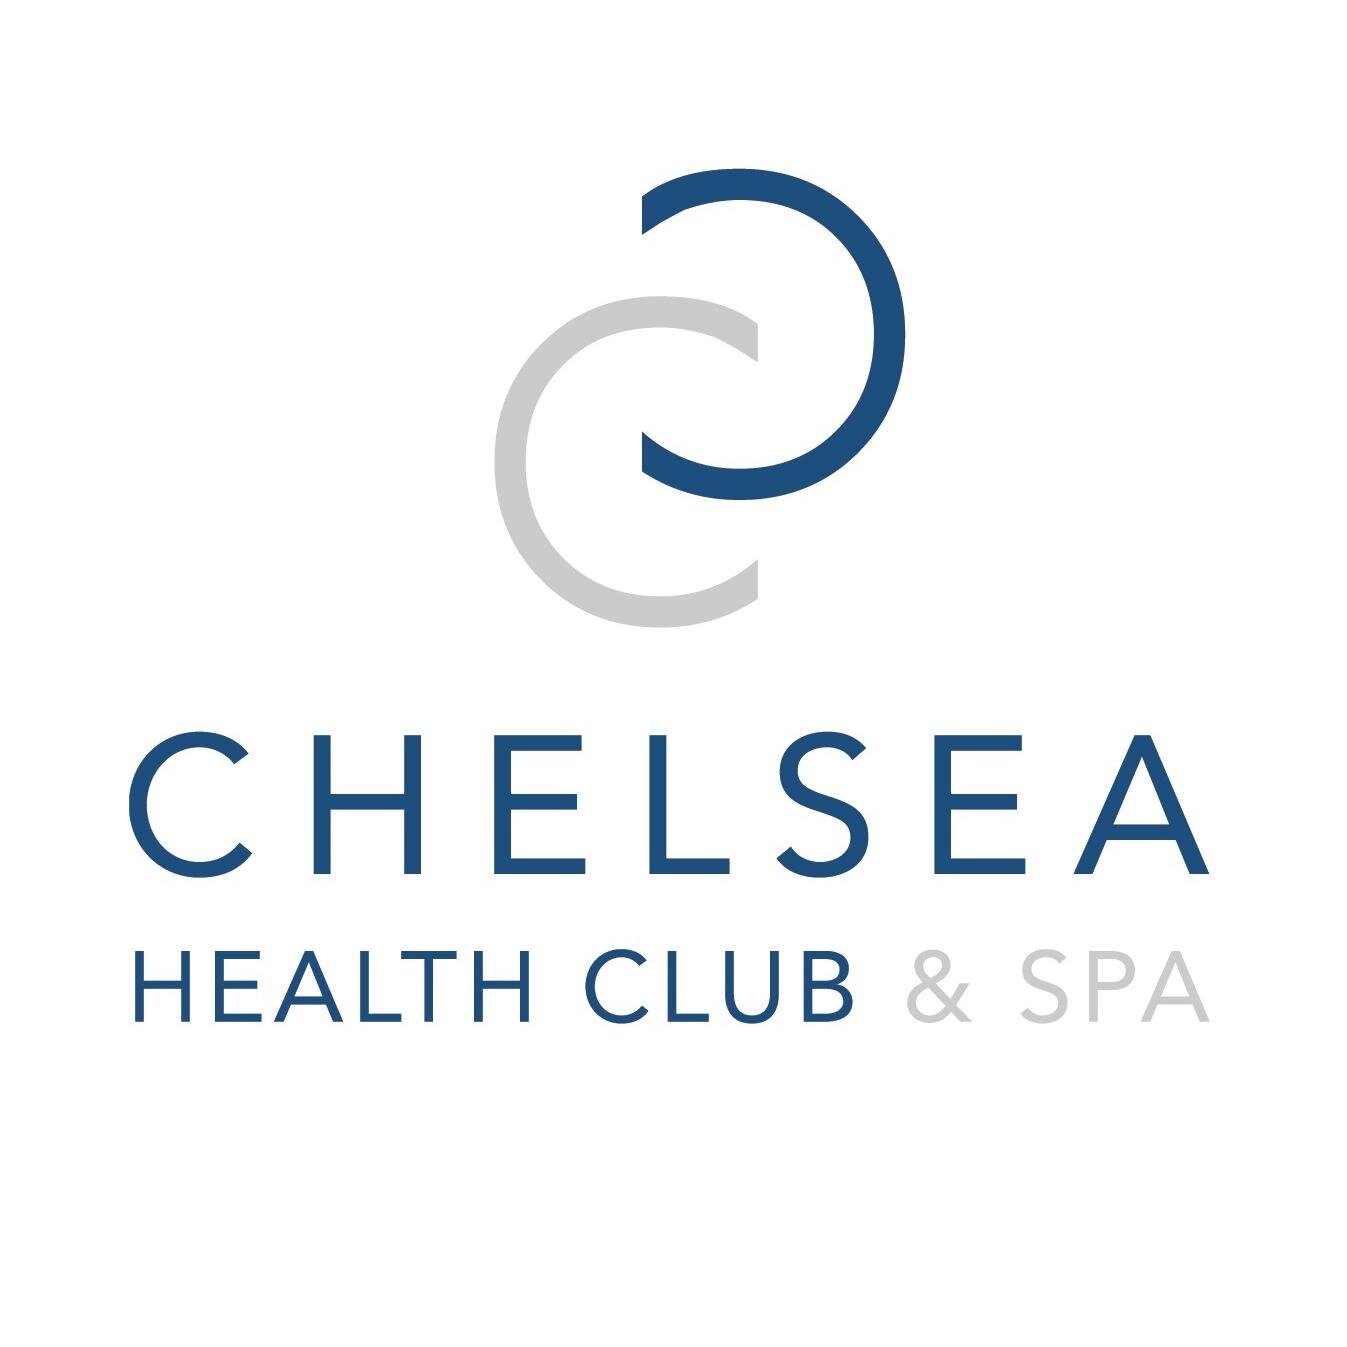 Chelsea Health Club